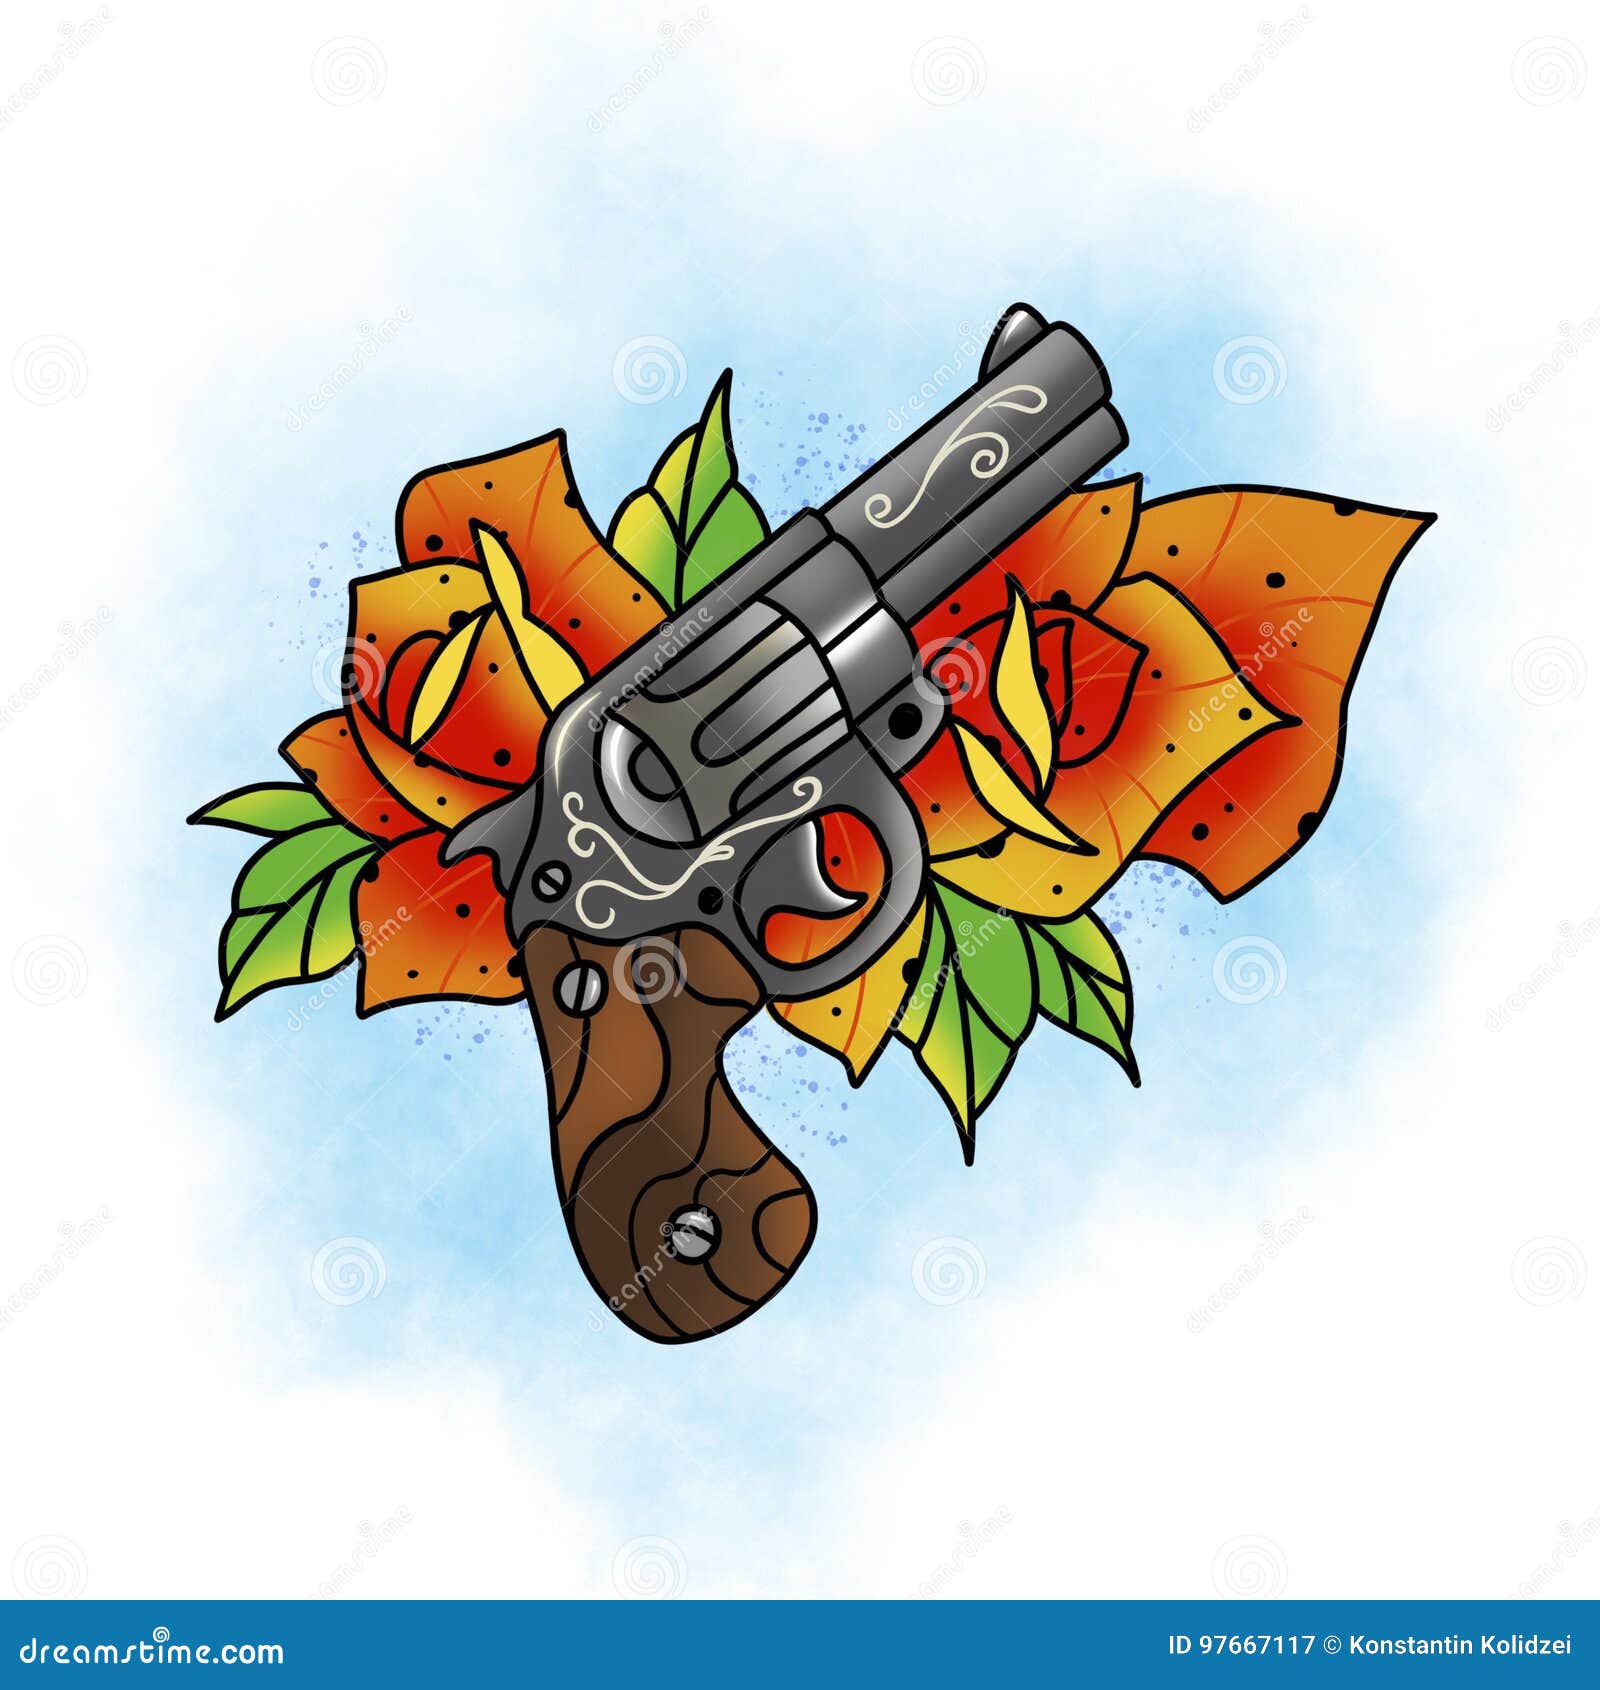 traditional revolver tattoo by LianjMc on DeviantArt